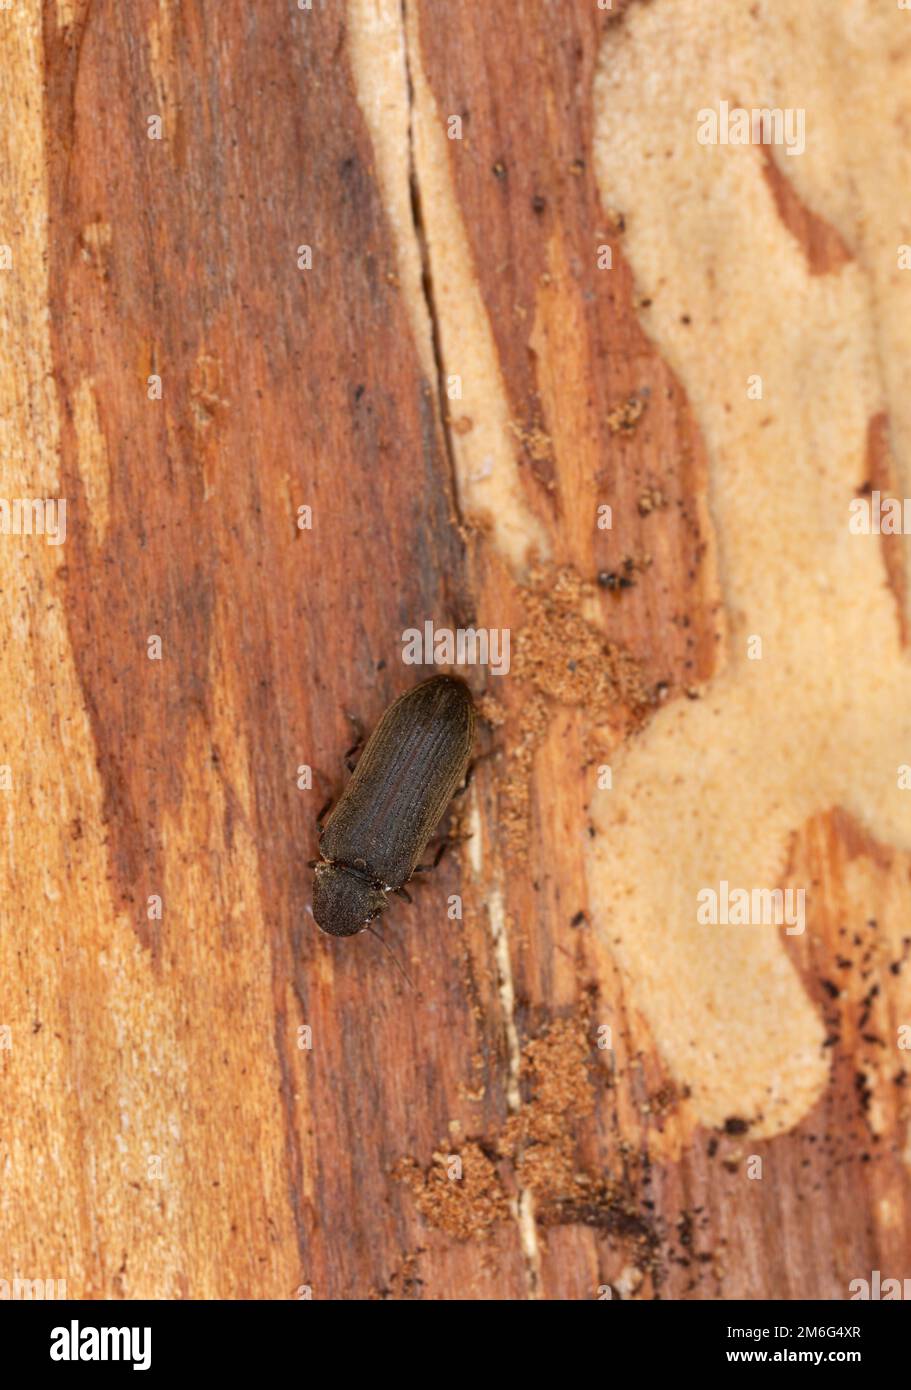 Cacotemnus thomsoni on fir wood, closeup photo Stock Photo